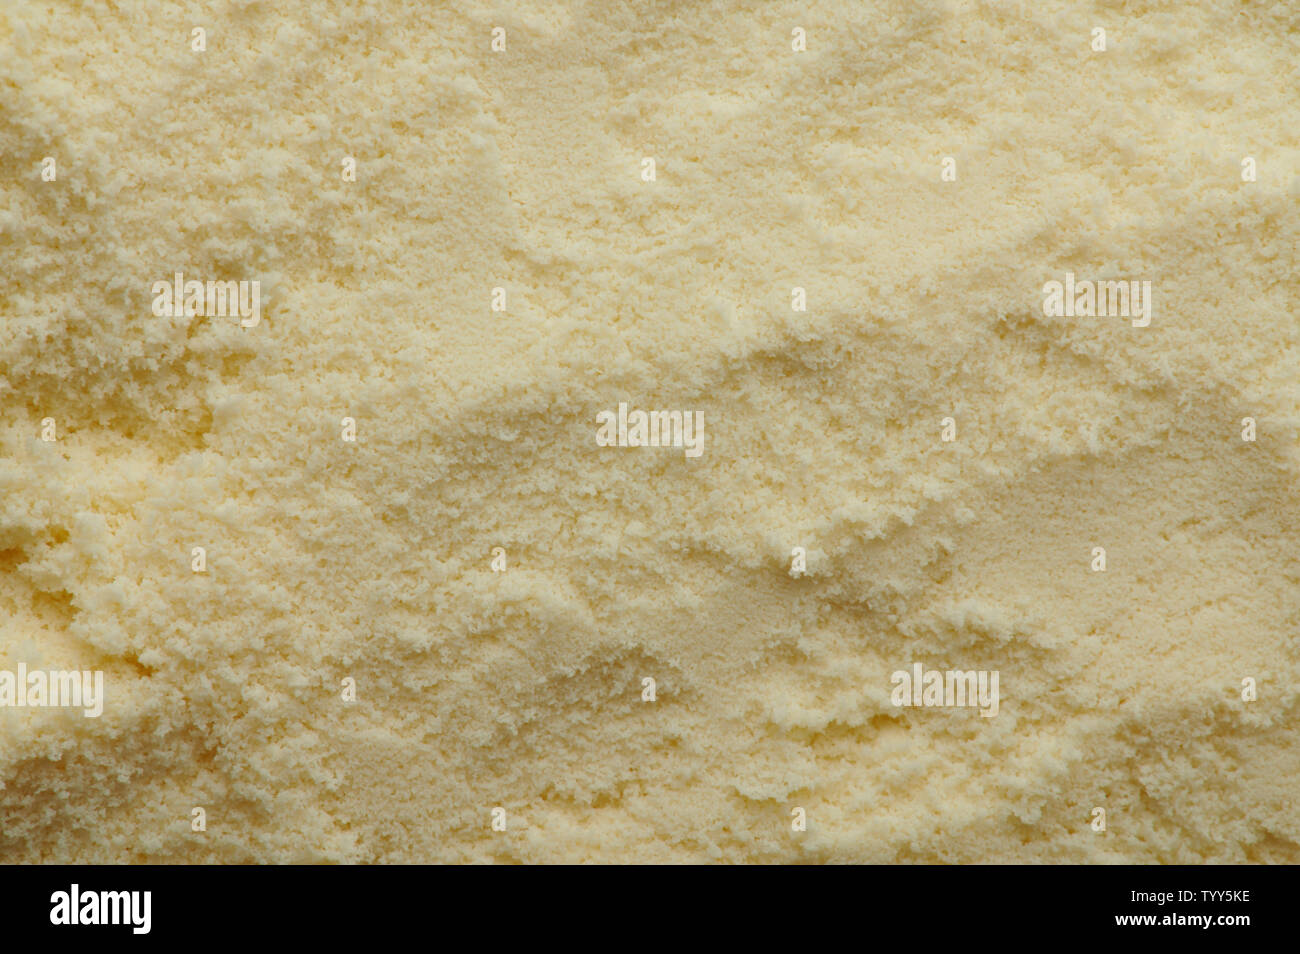 Yellow dry food powder macro close up texture view Stock Photo